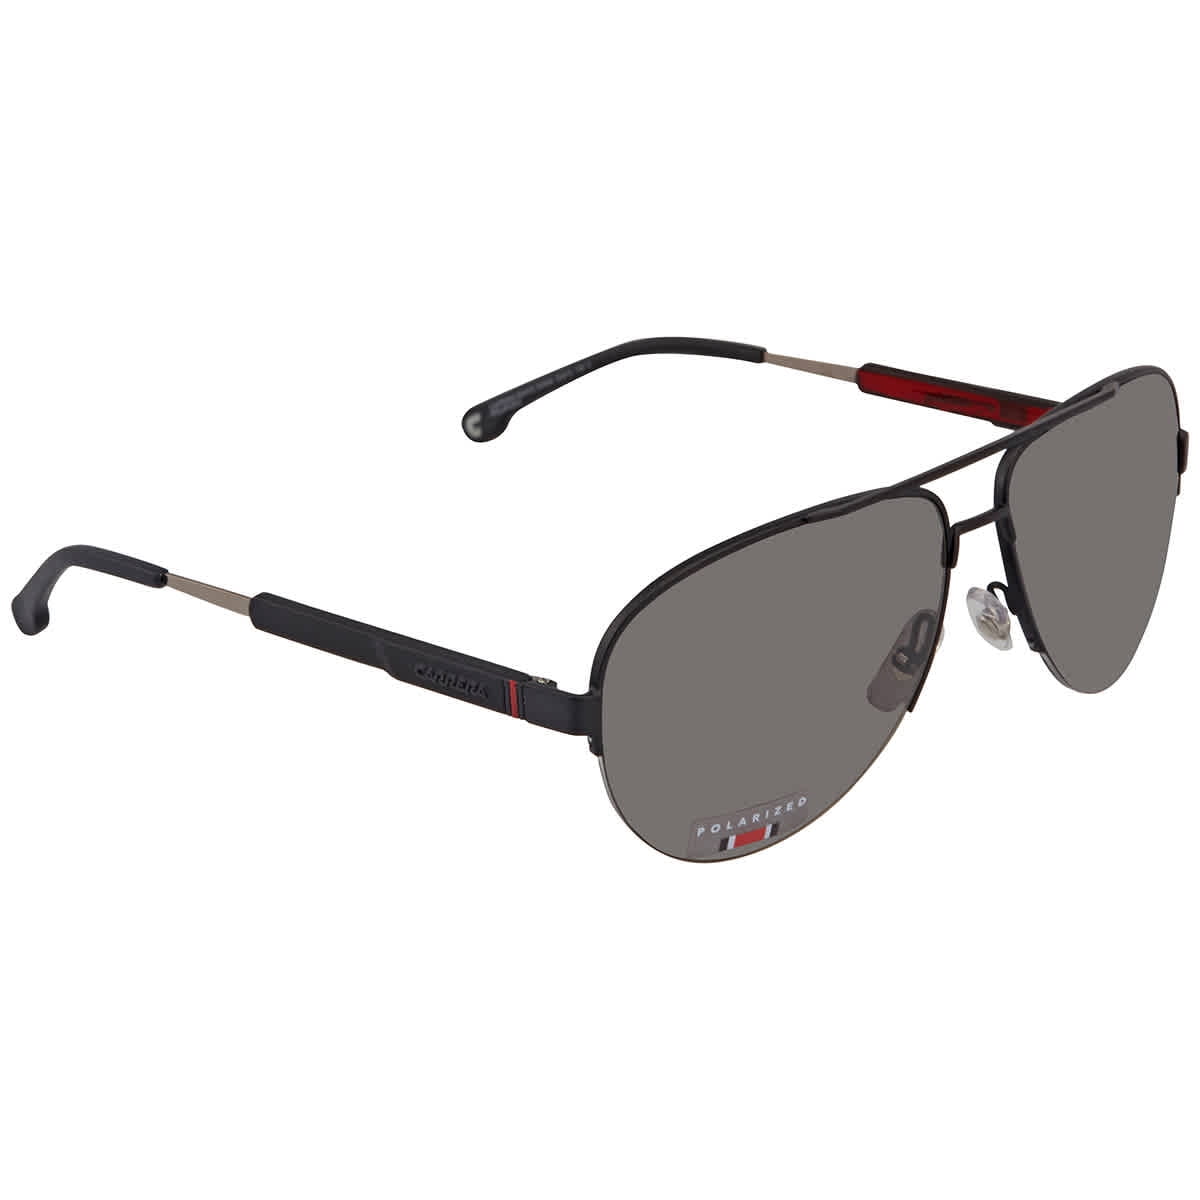 Carrera Sunglasses Cool 65 003/M9 Matte Black Grey Polarized 